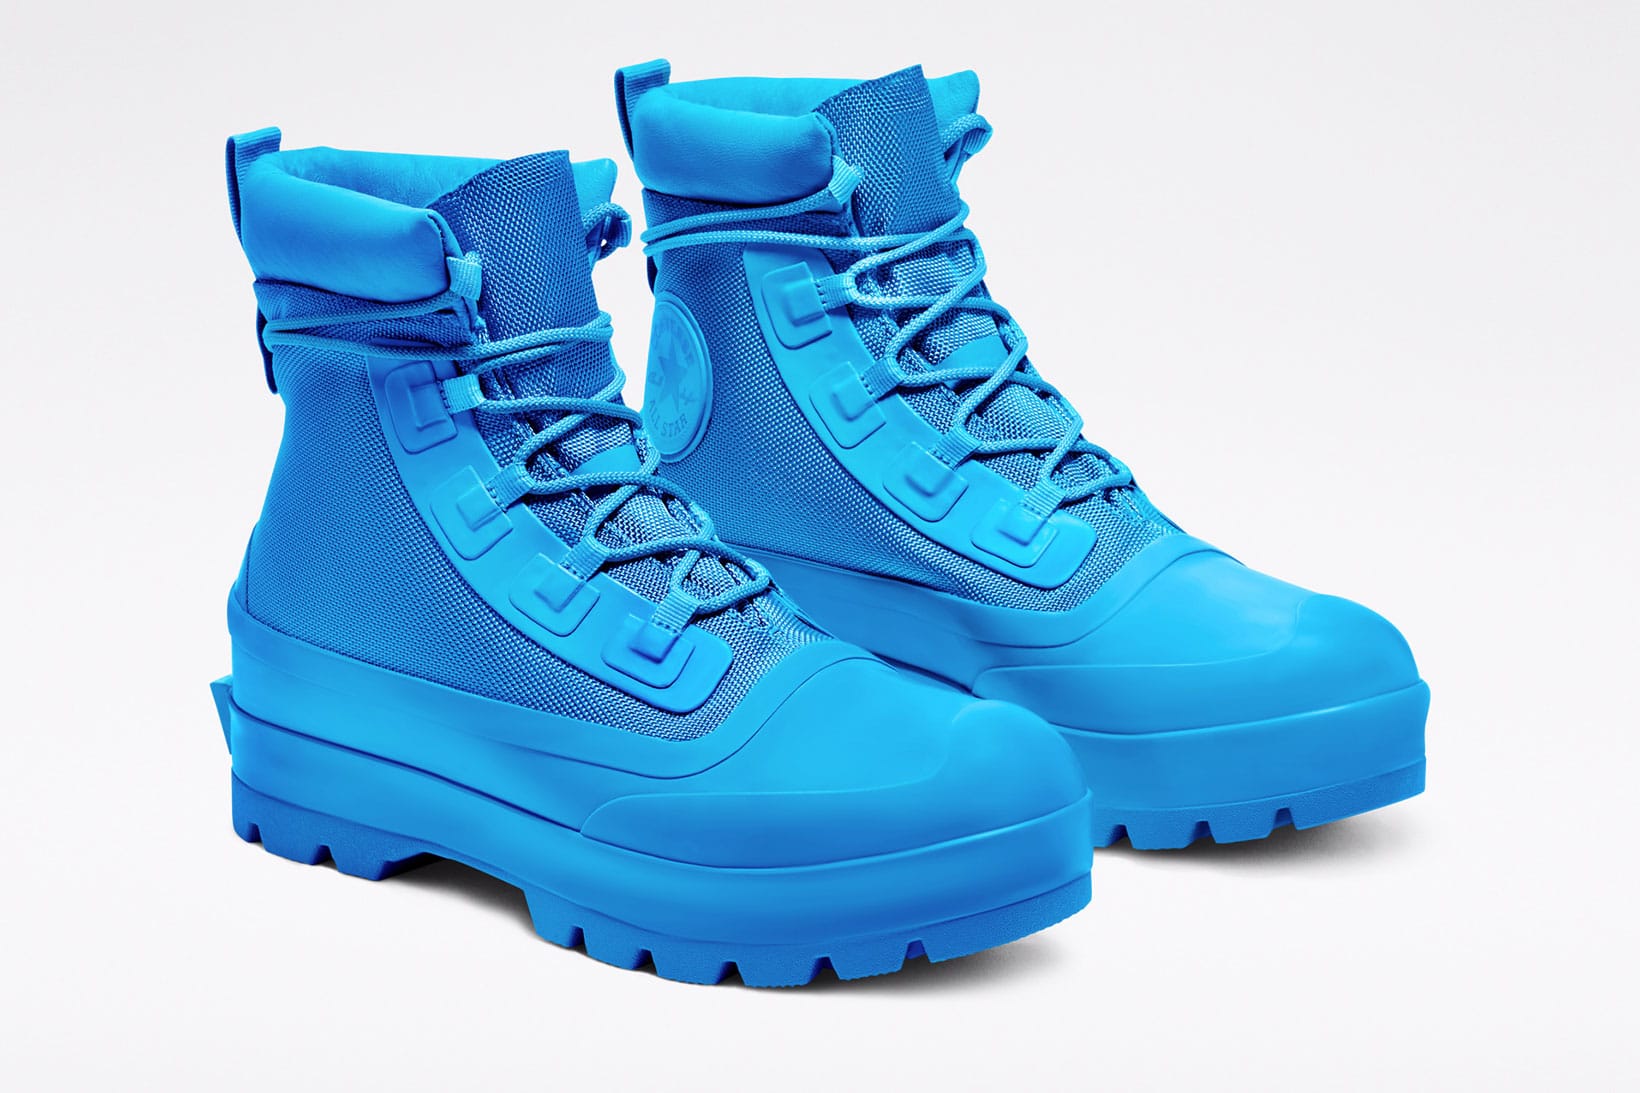 rain boots that look like converse